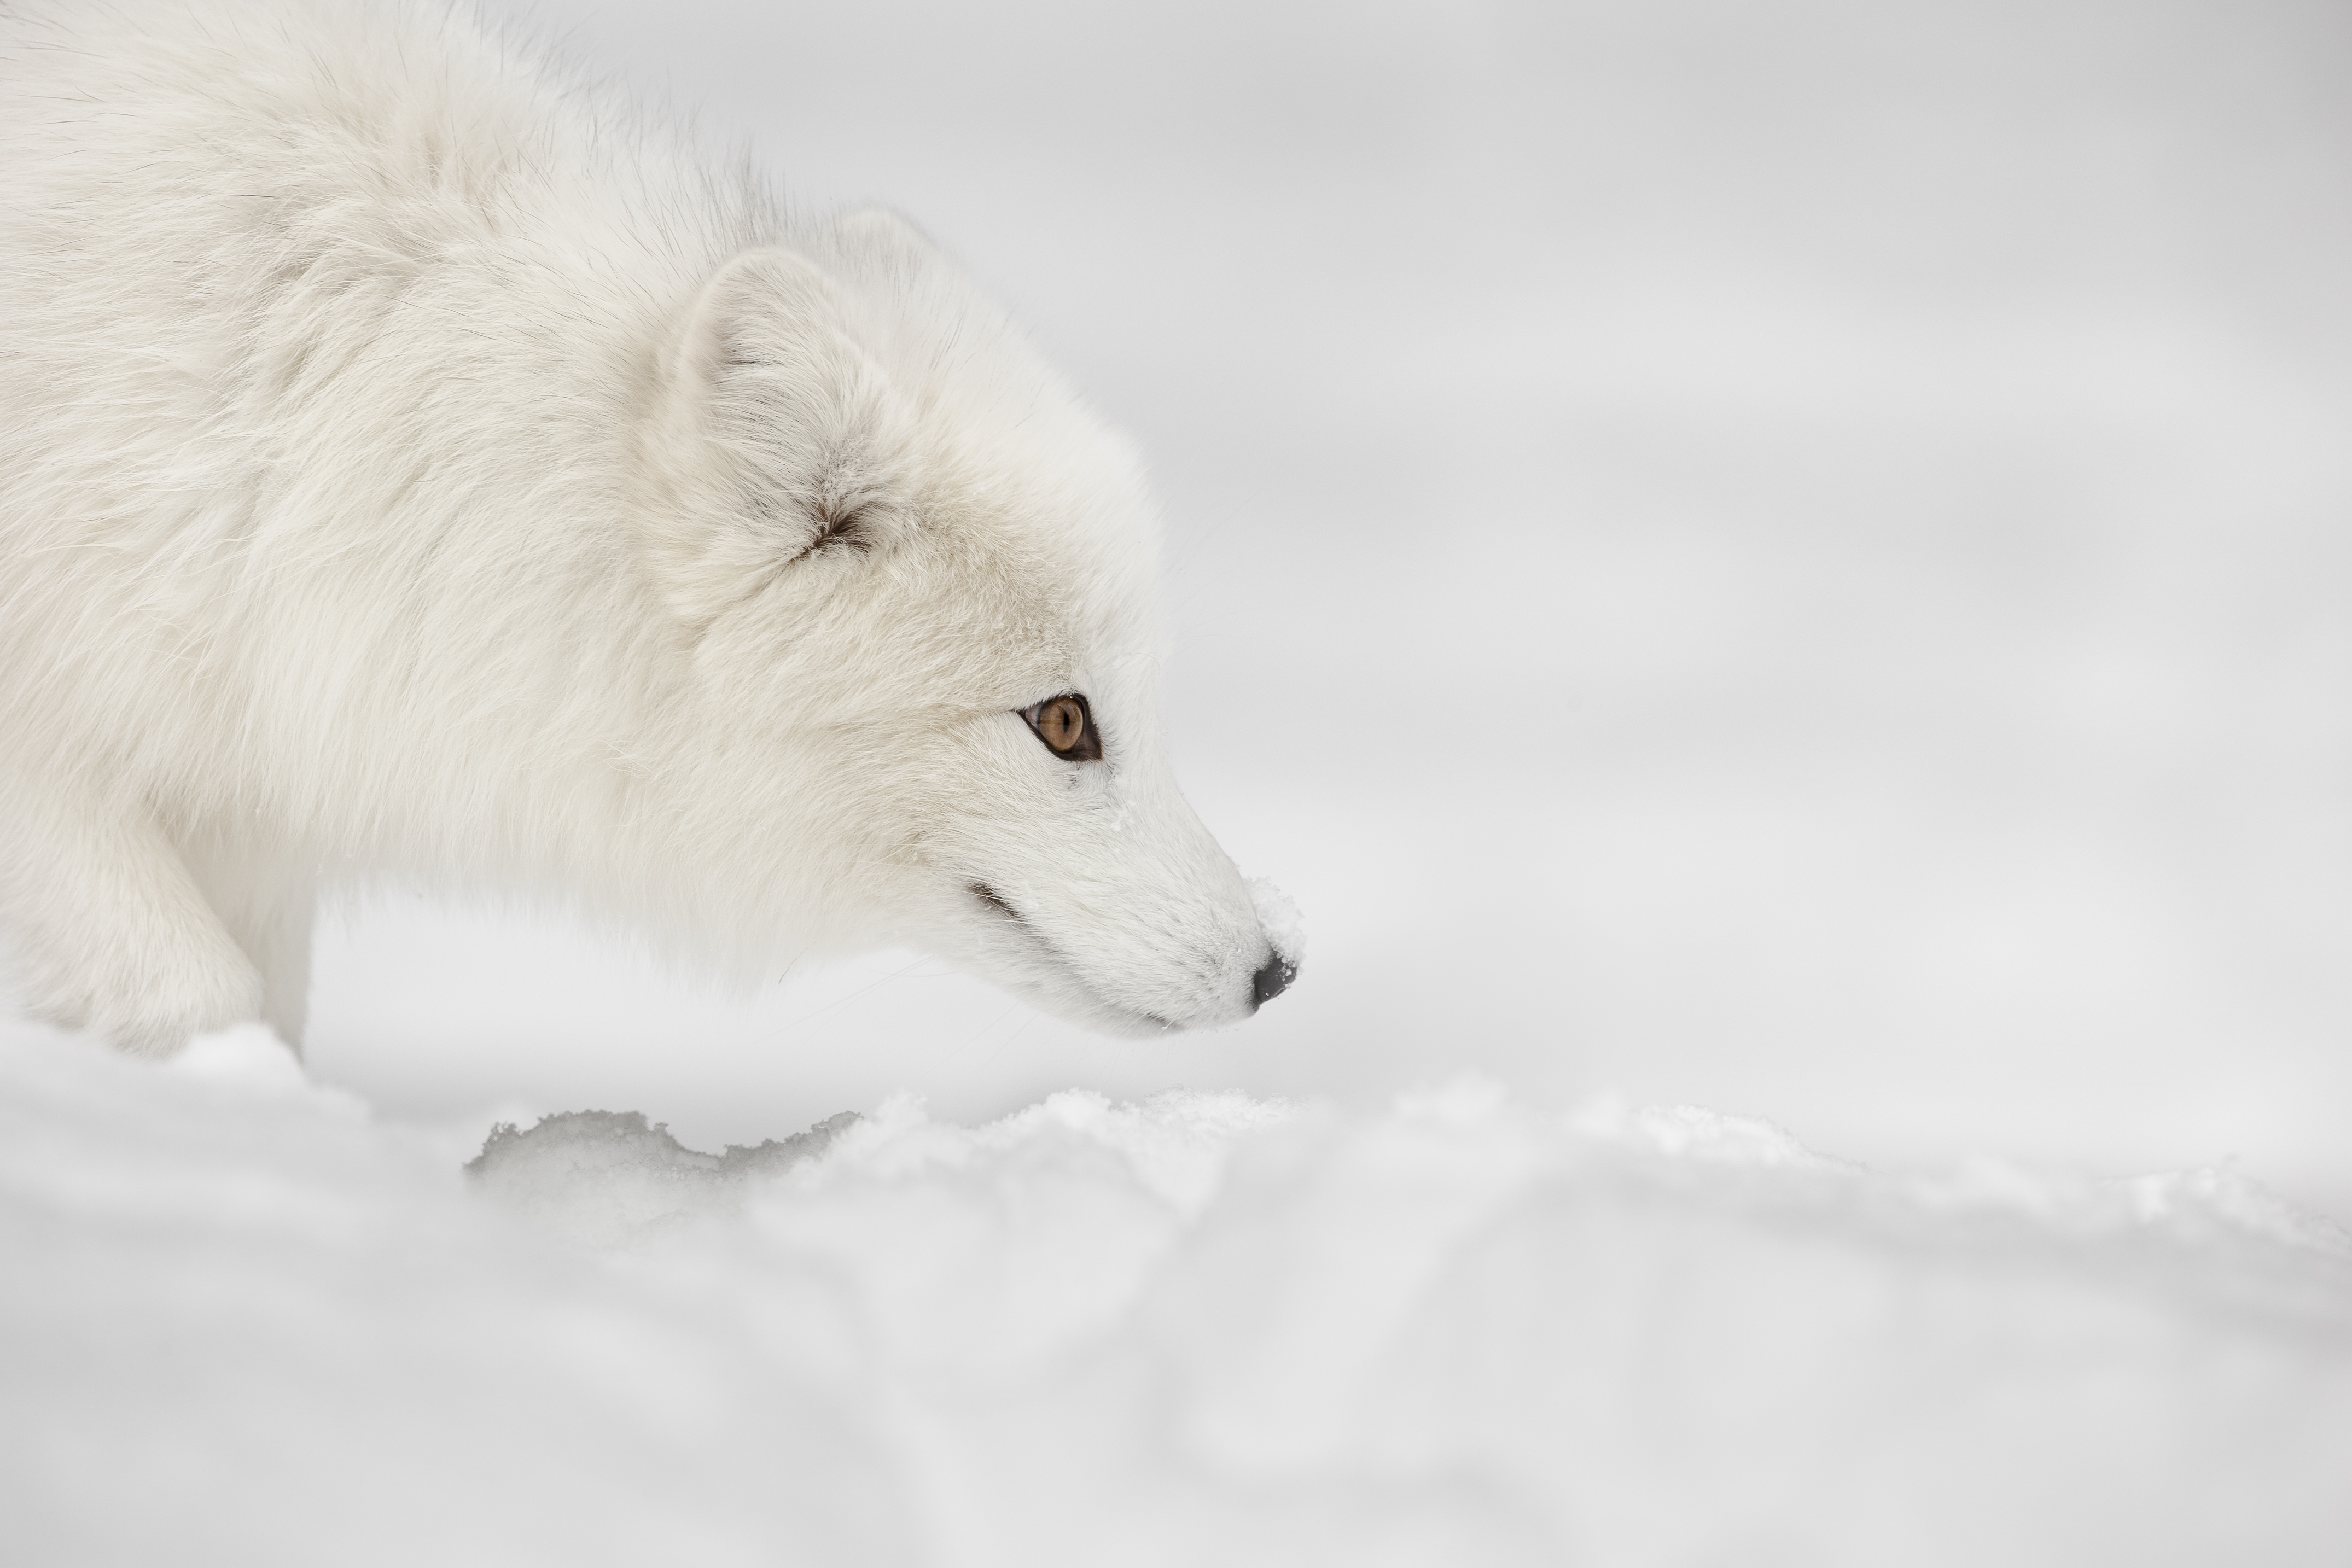 arctic tundra animals